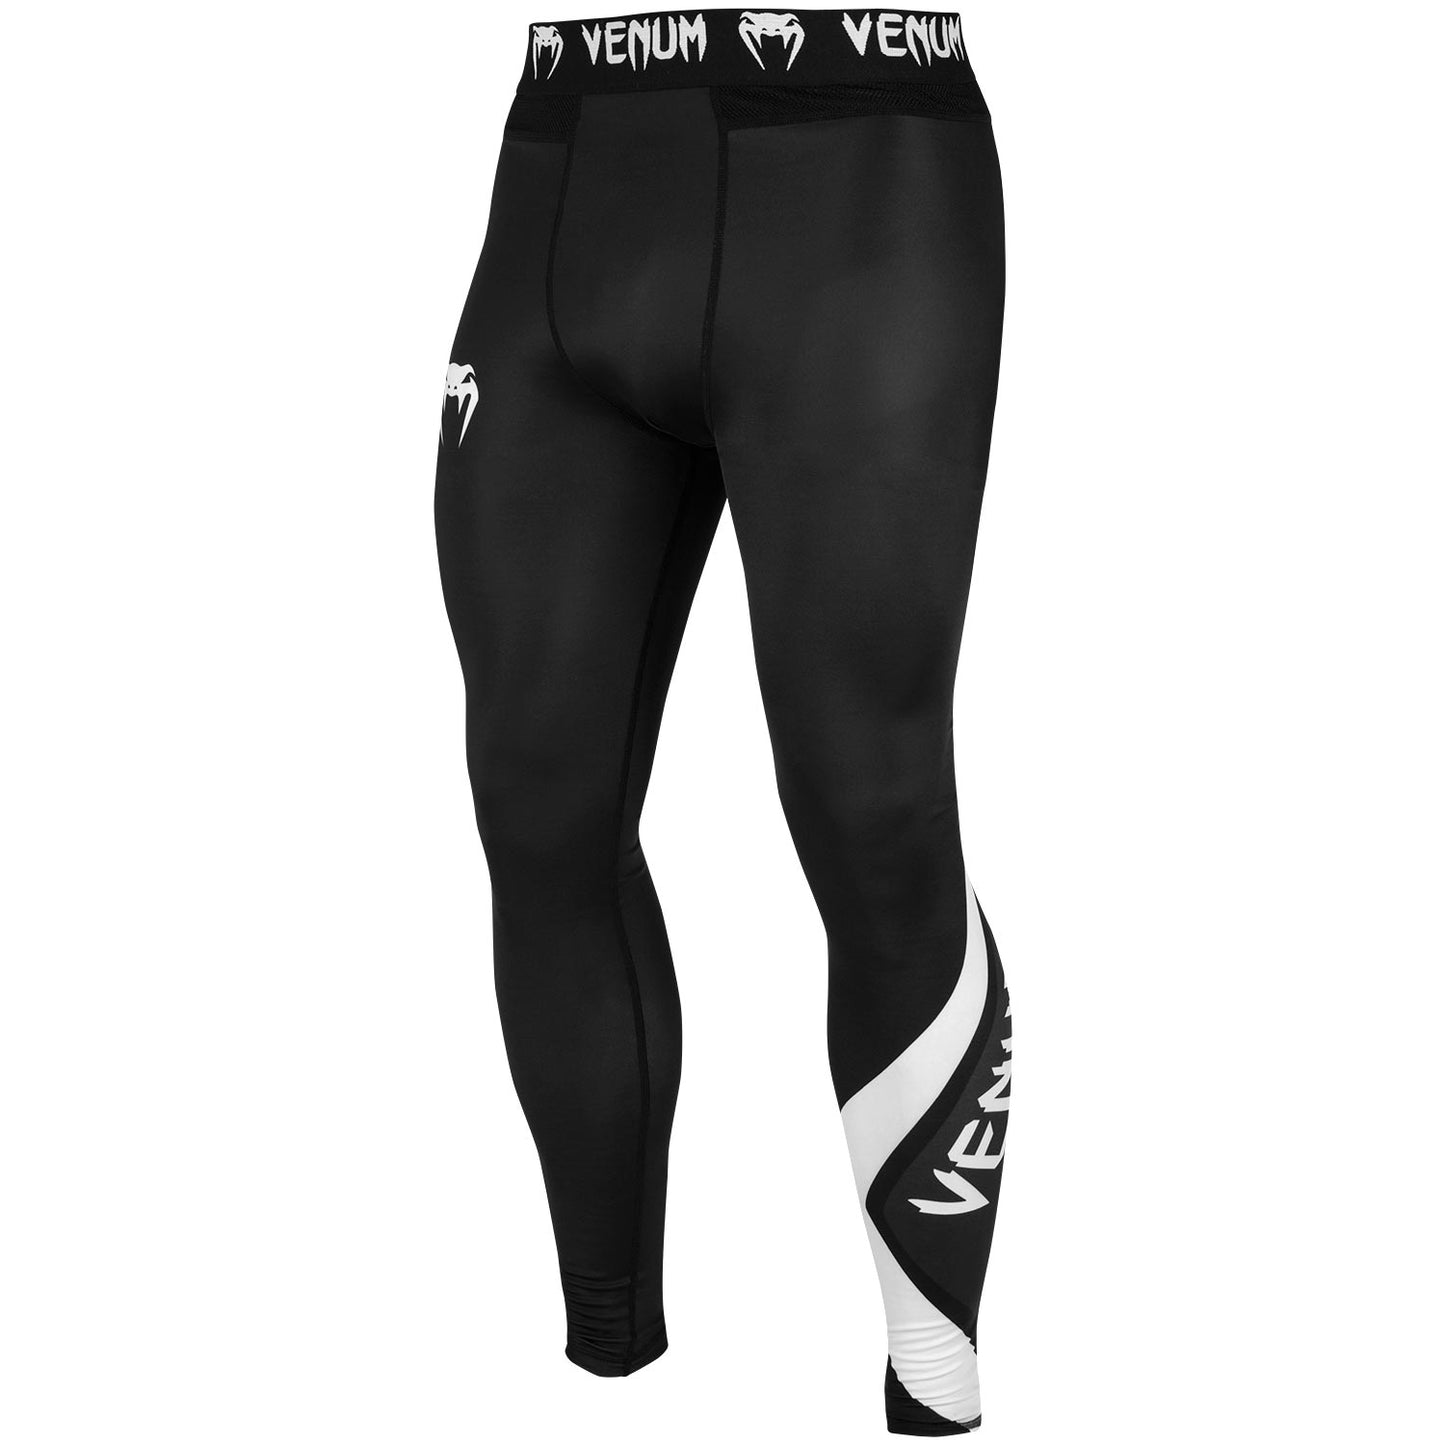 Compression pants Venum Contender 4.0 black, grey, white 